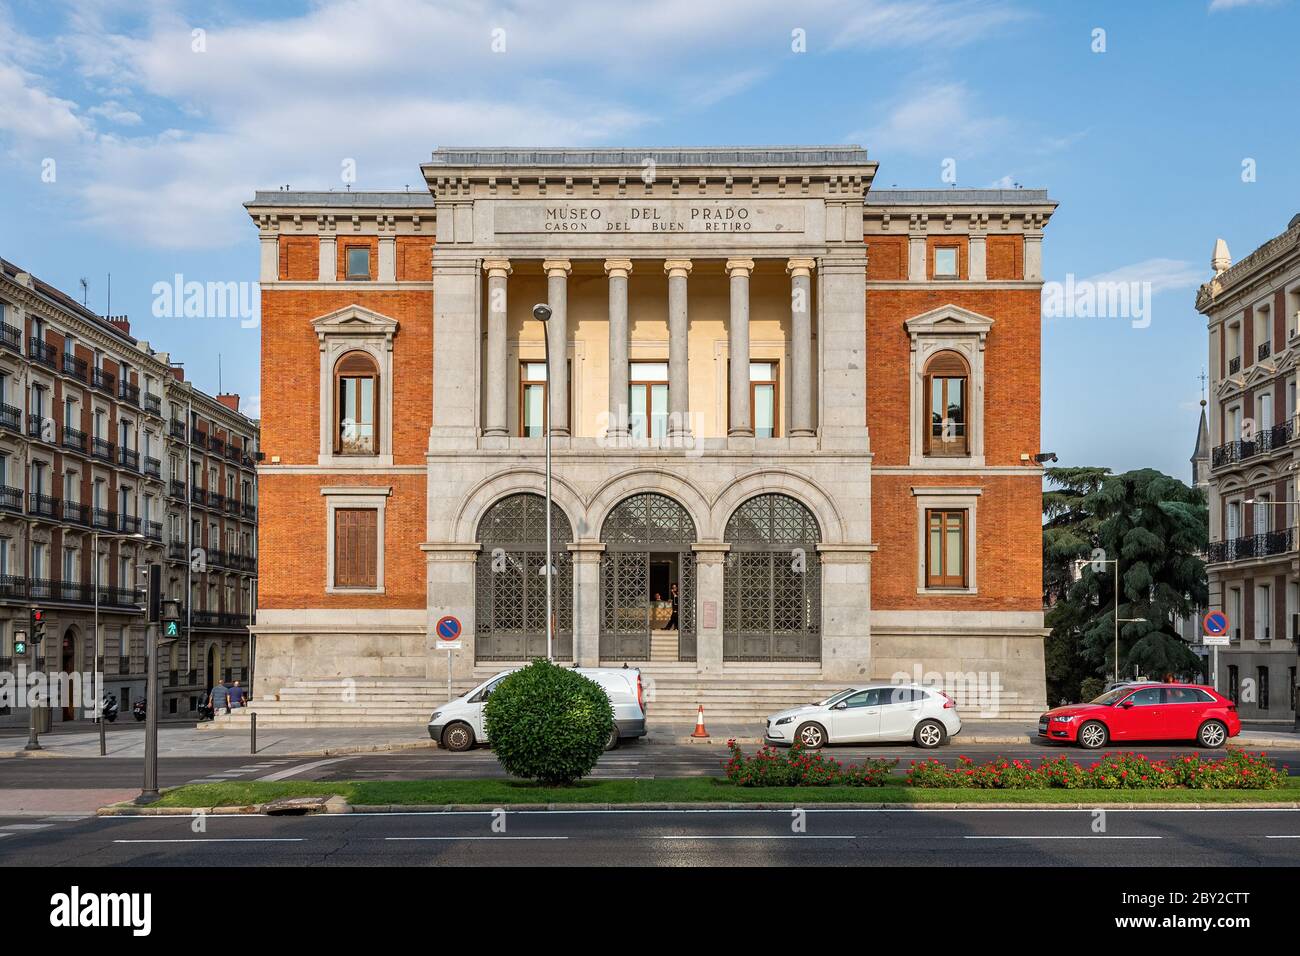 Facade of Cason del Buen Retiro building, a part of Museo del Prado complex in Madrid. Stock Photo